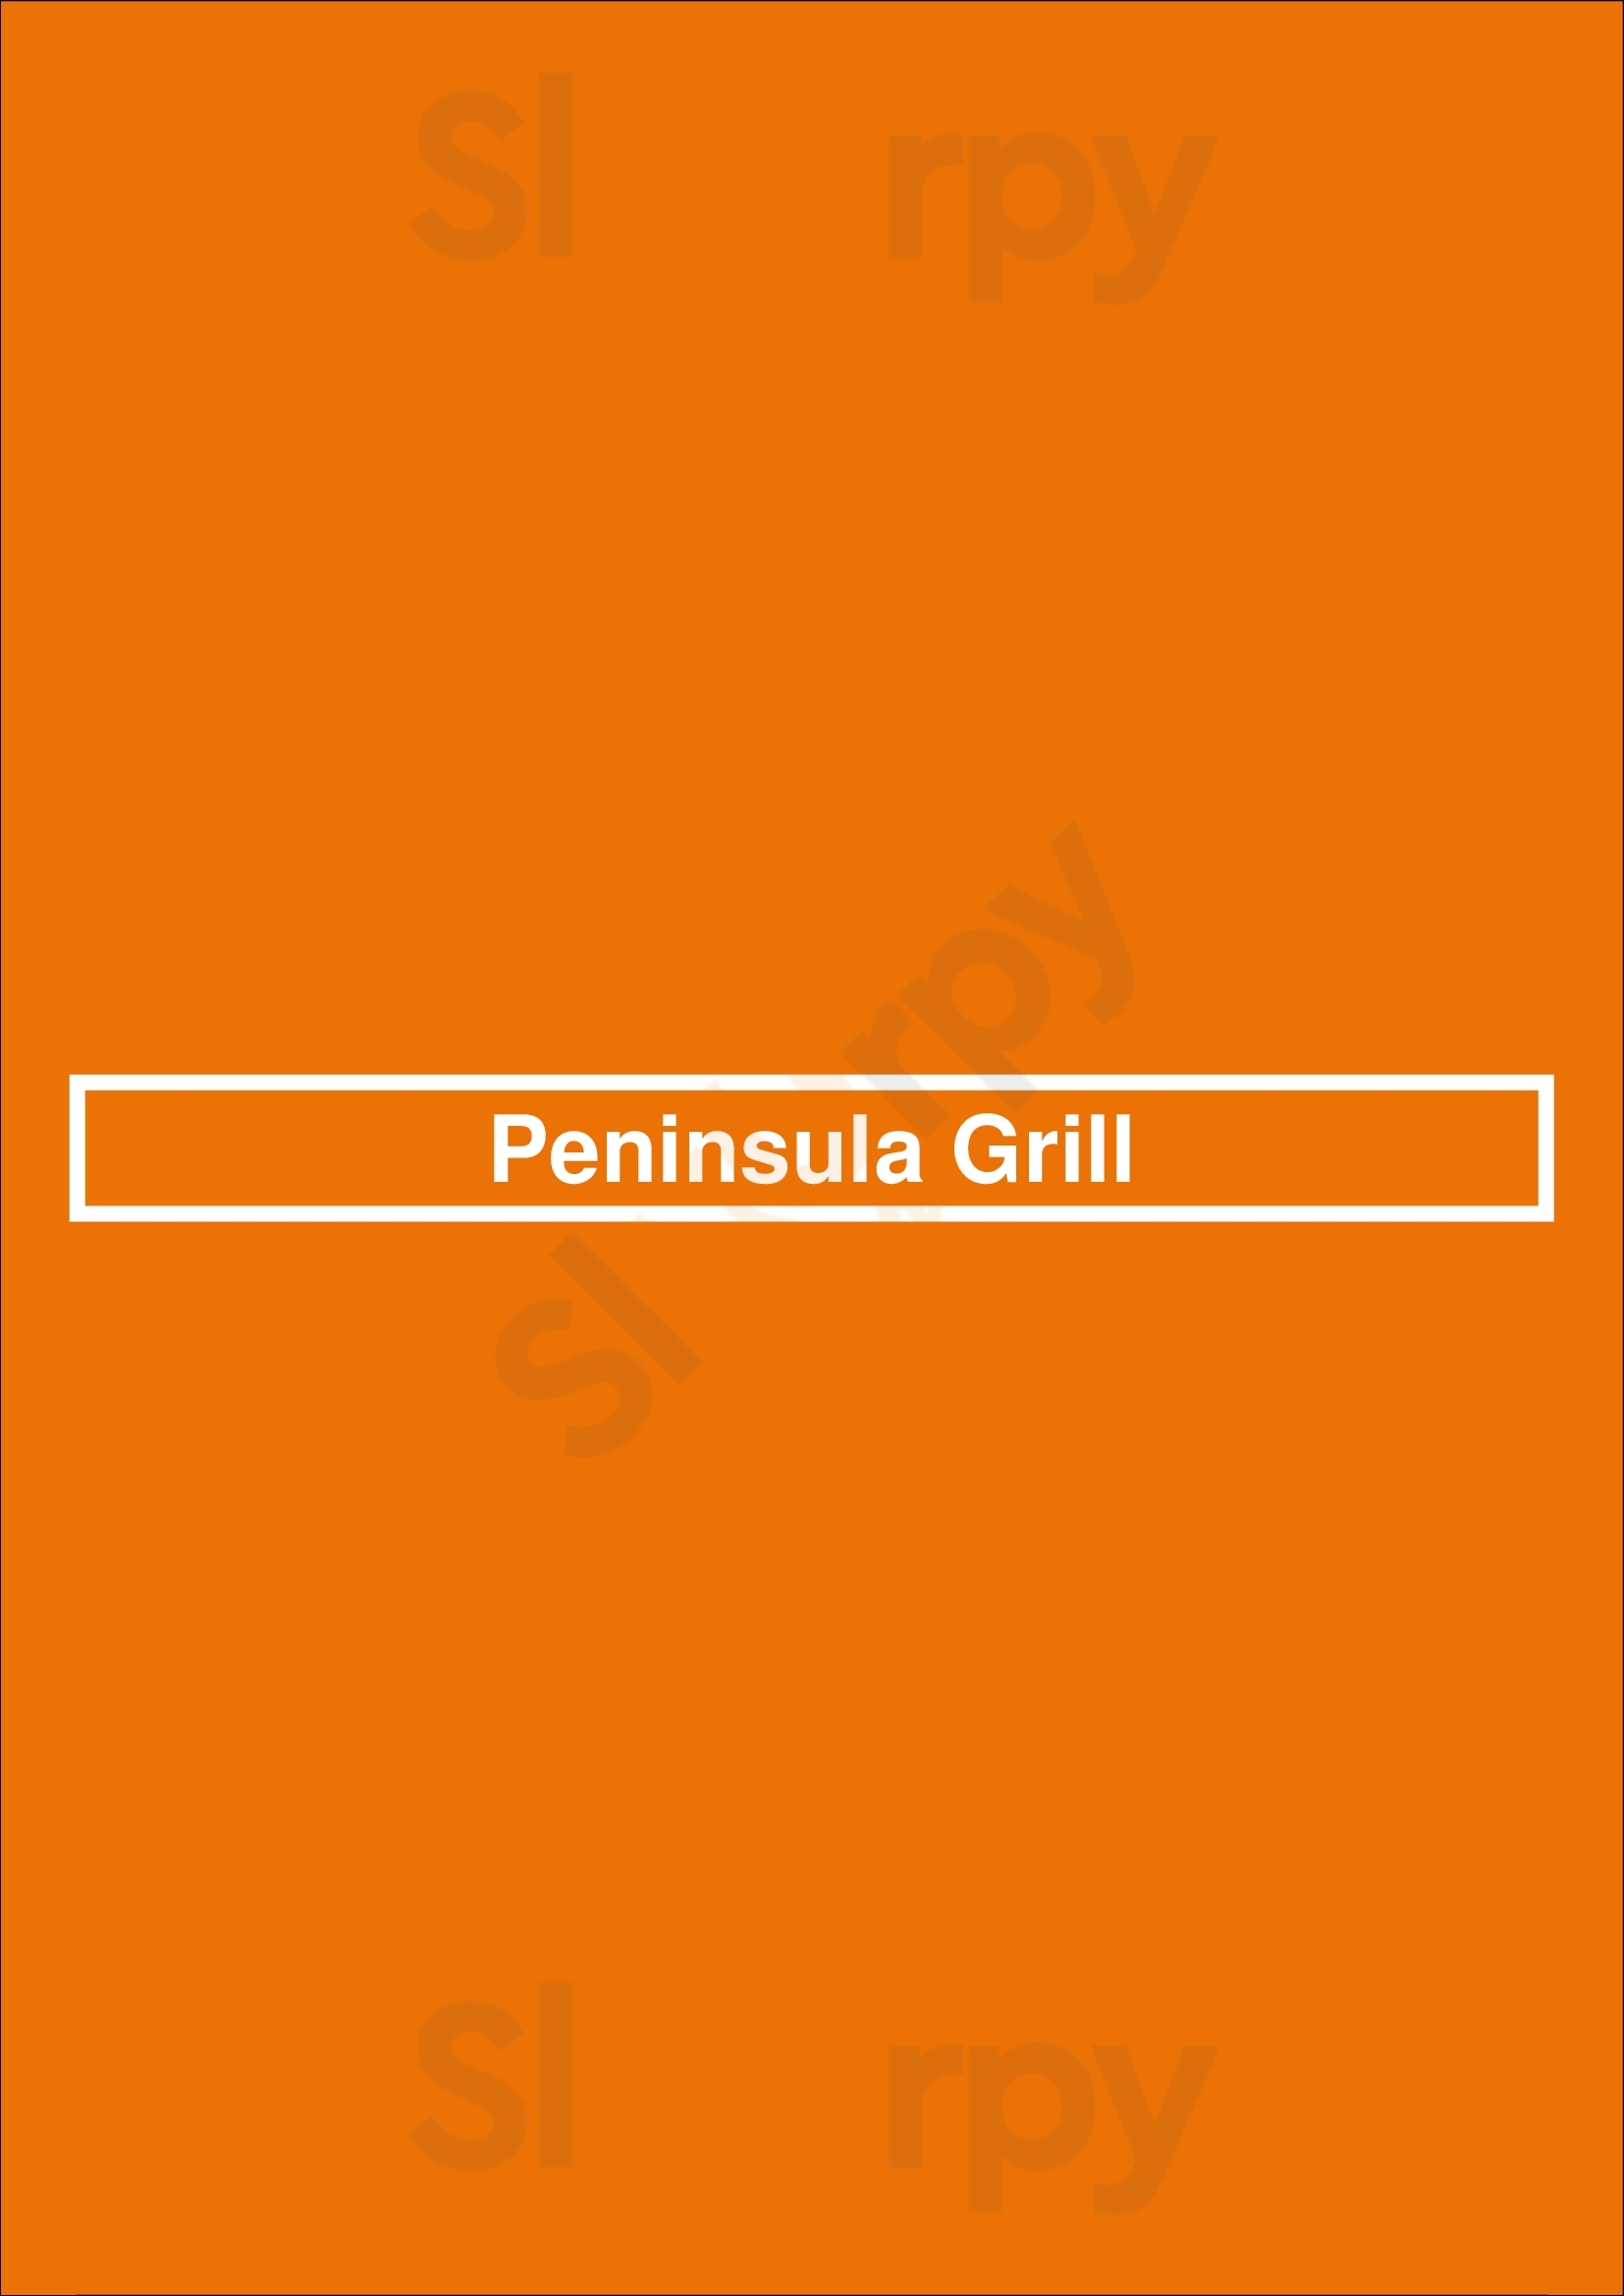 Peninsula Grill Charleston Menu - 1